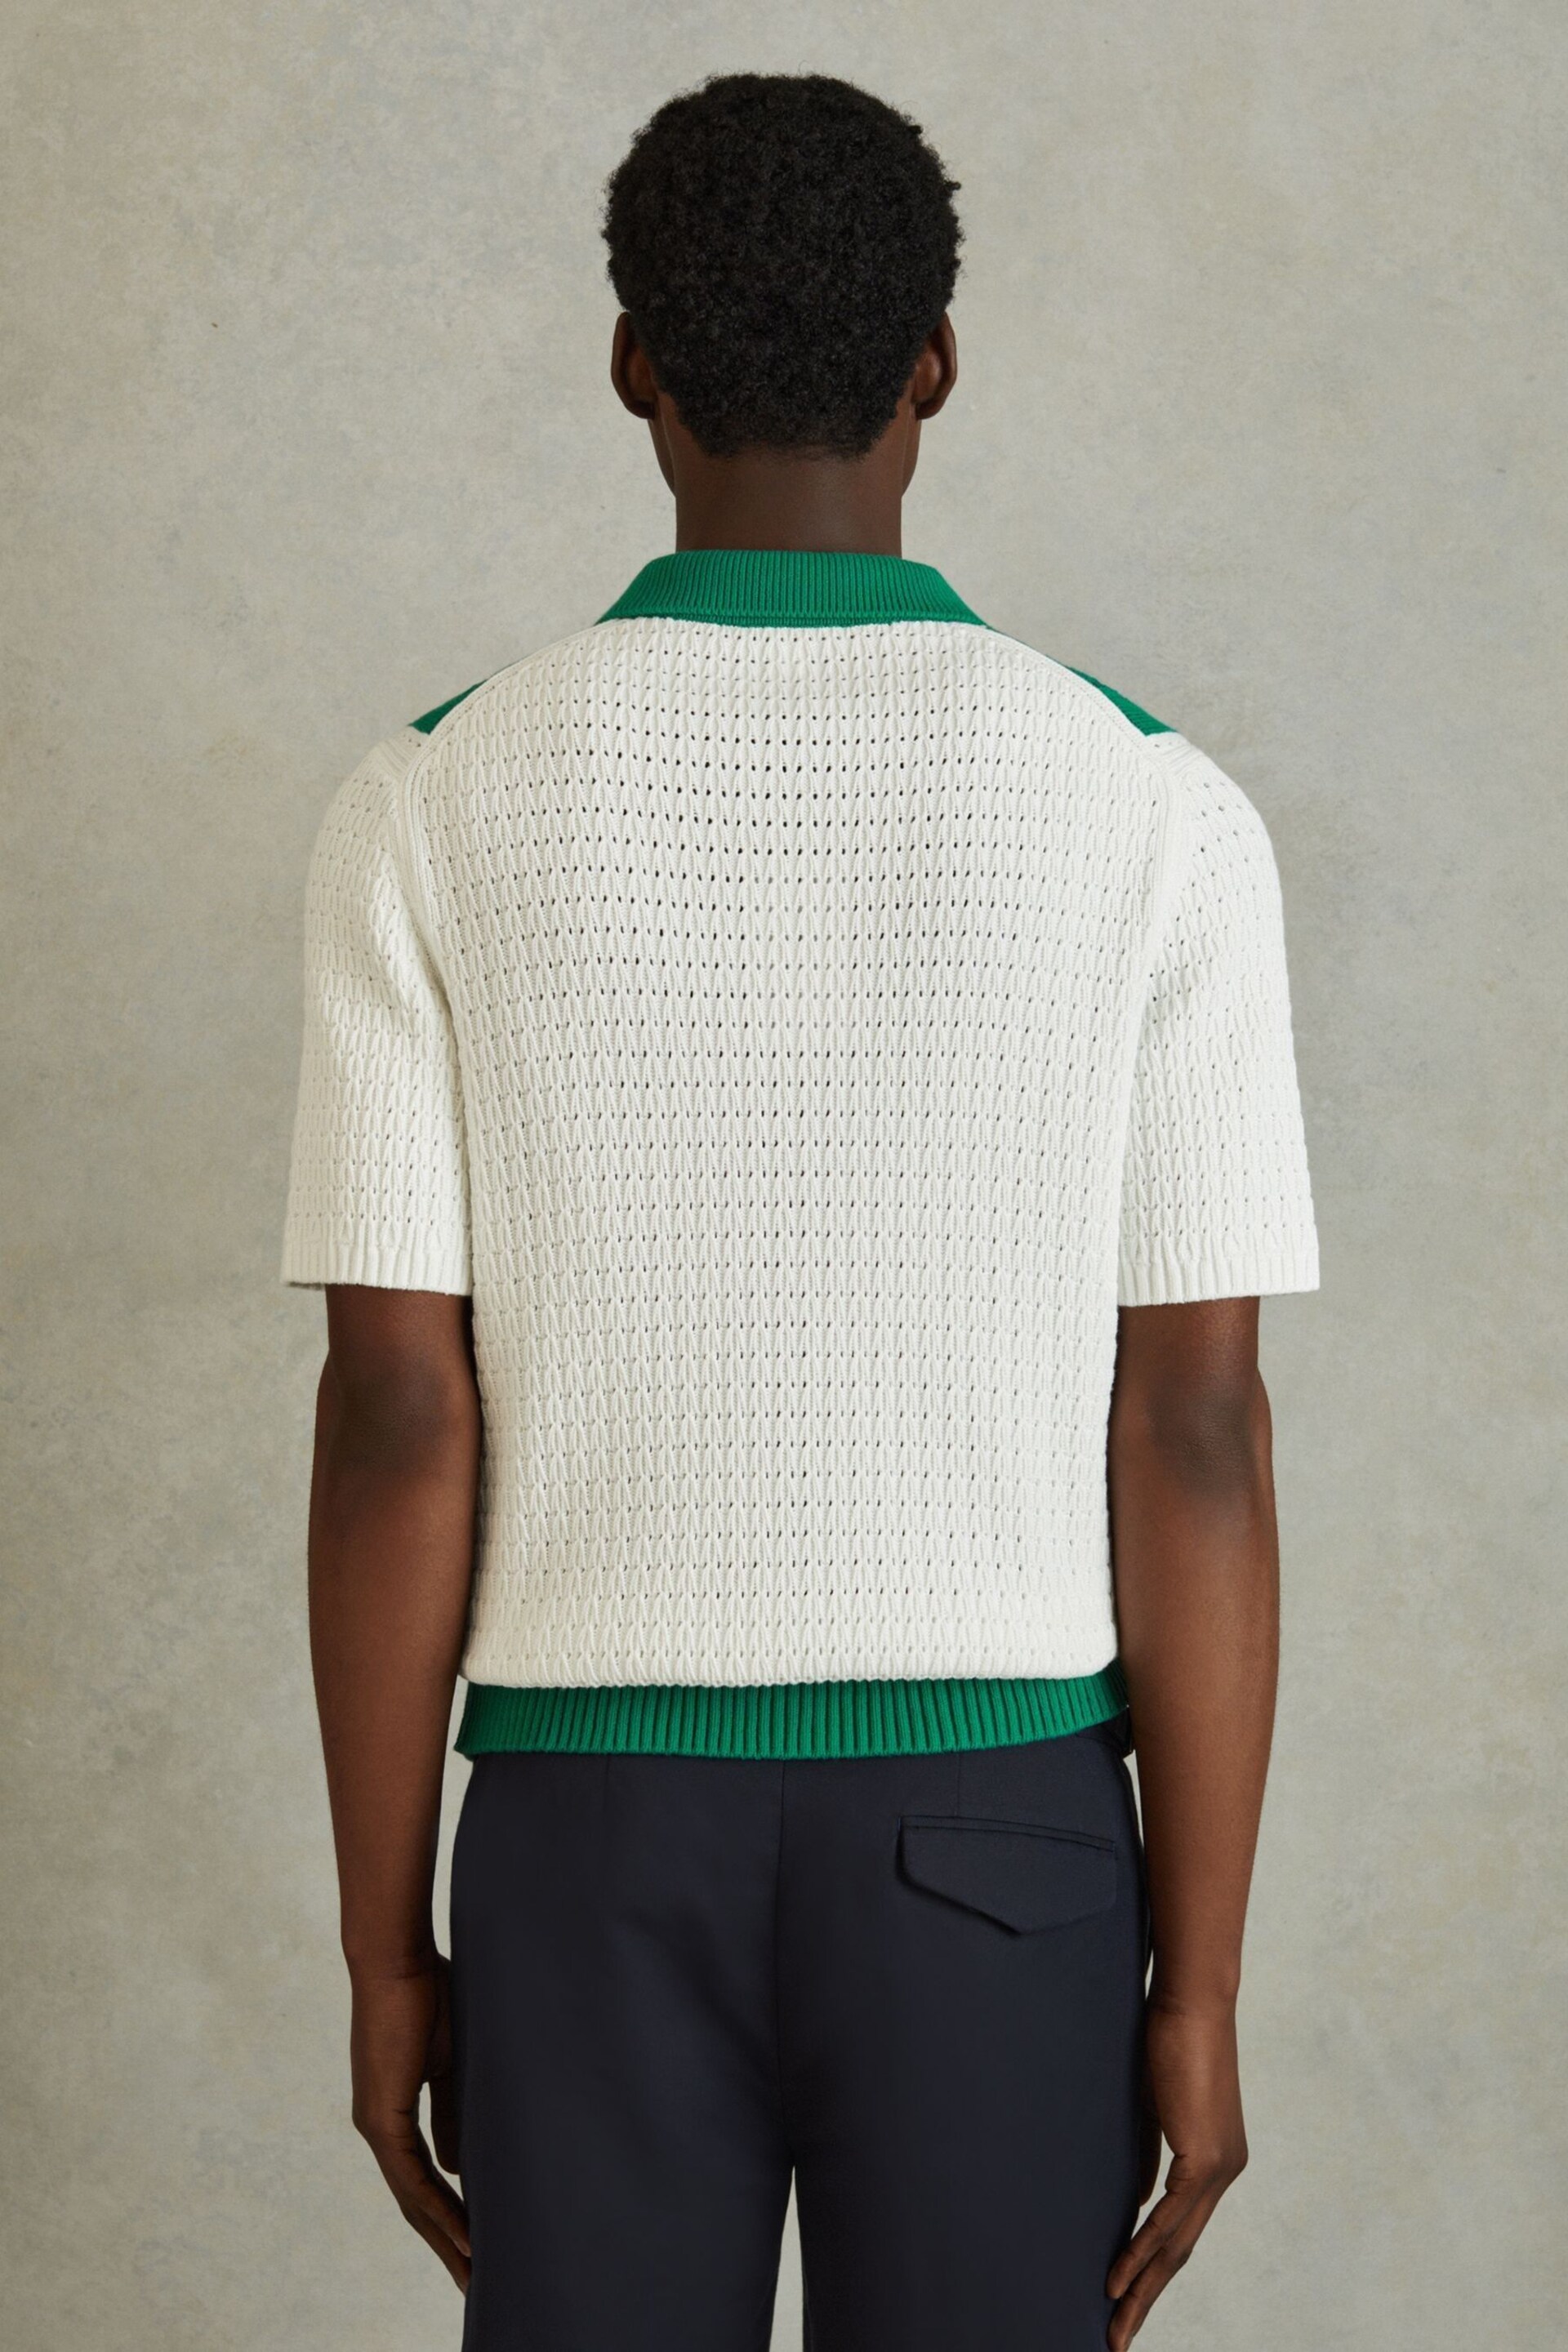 Reiss White/Bright Green Painter Crochet Zip-Front Shirt - Image 4 of 5